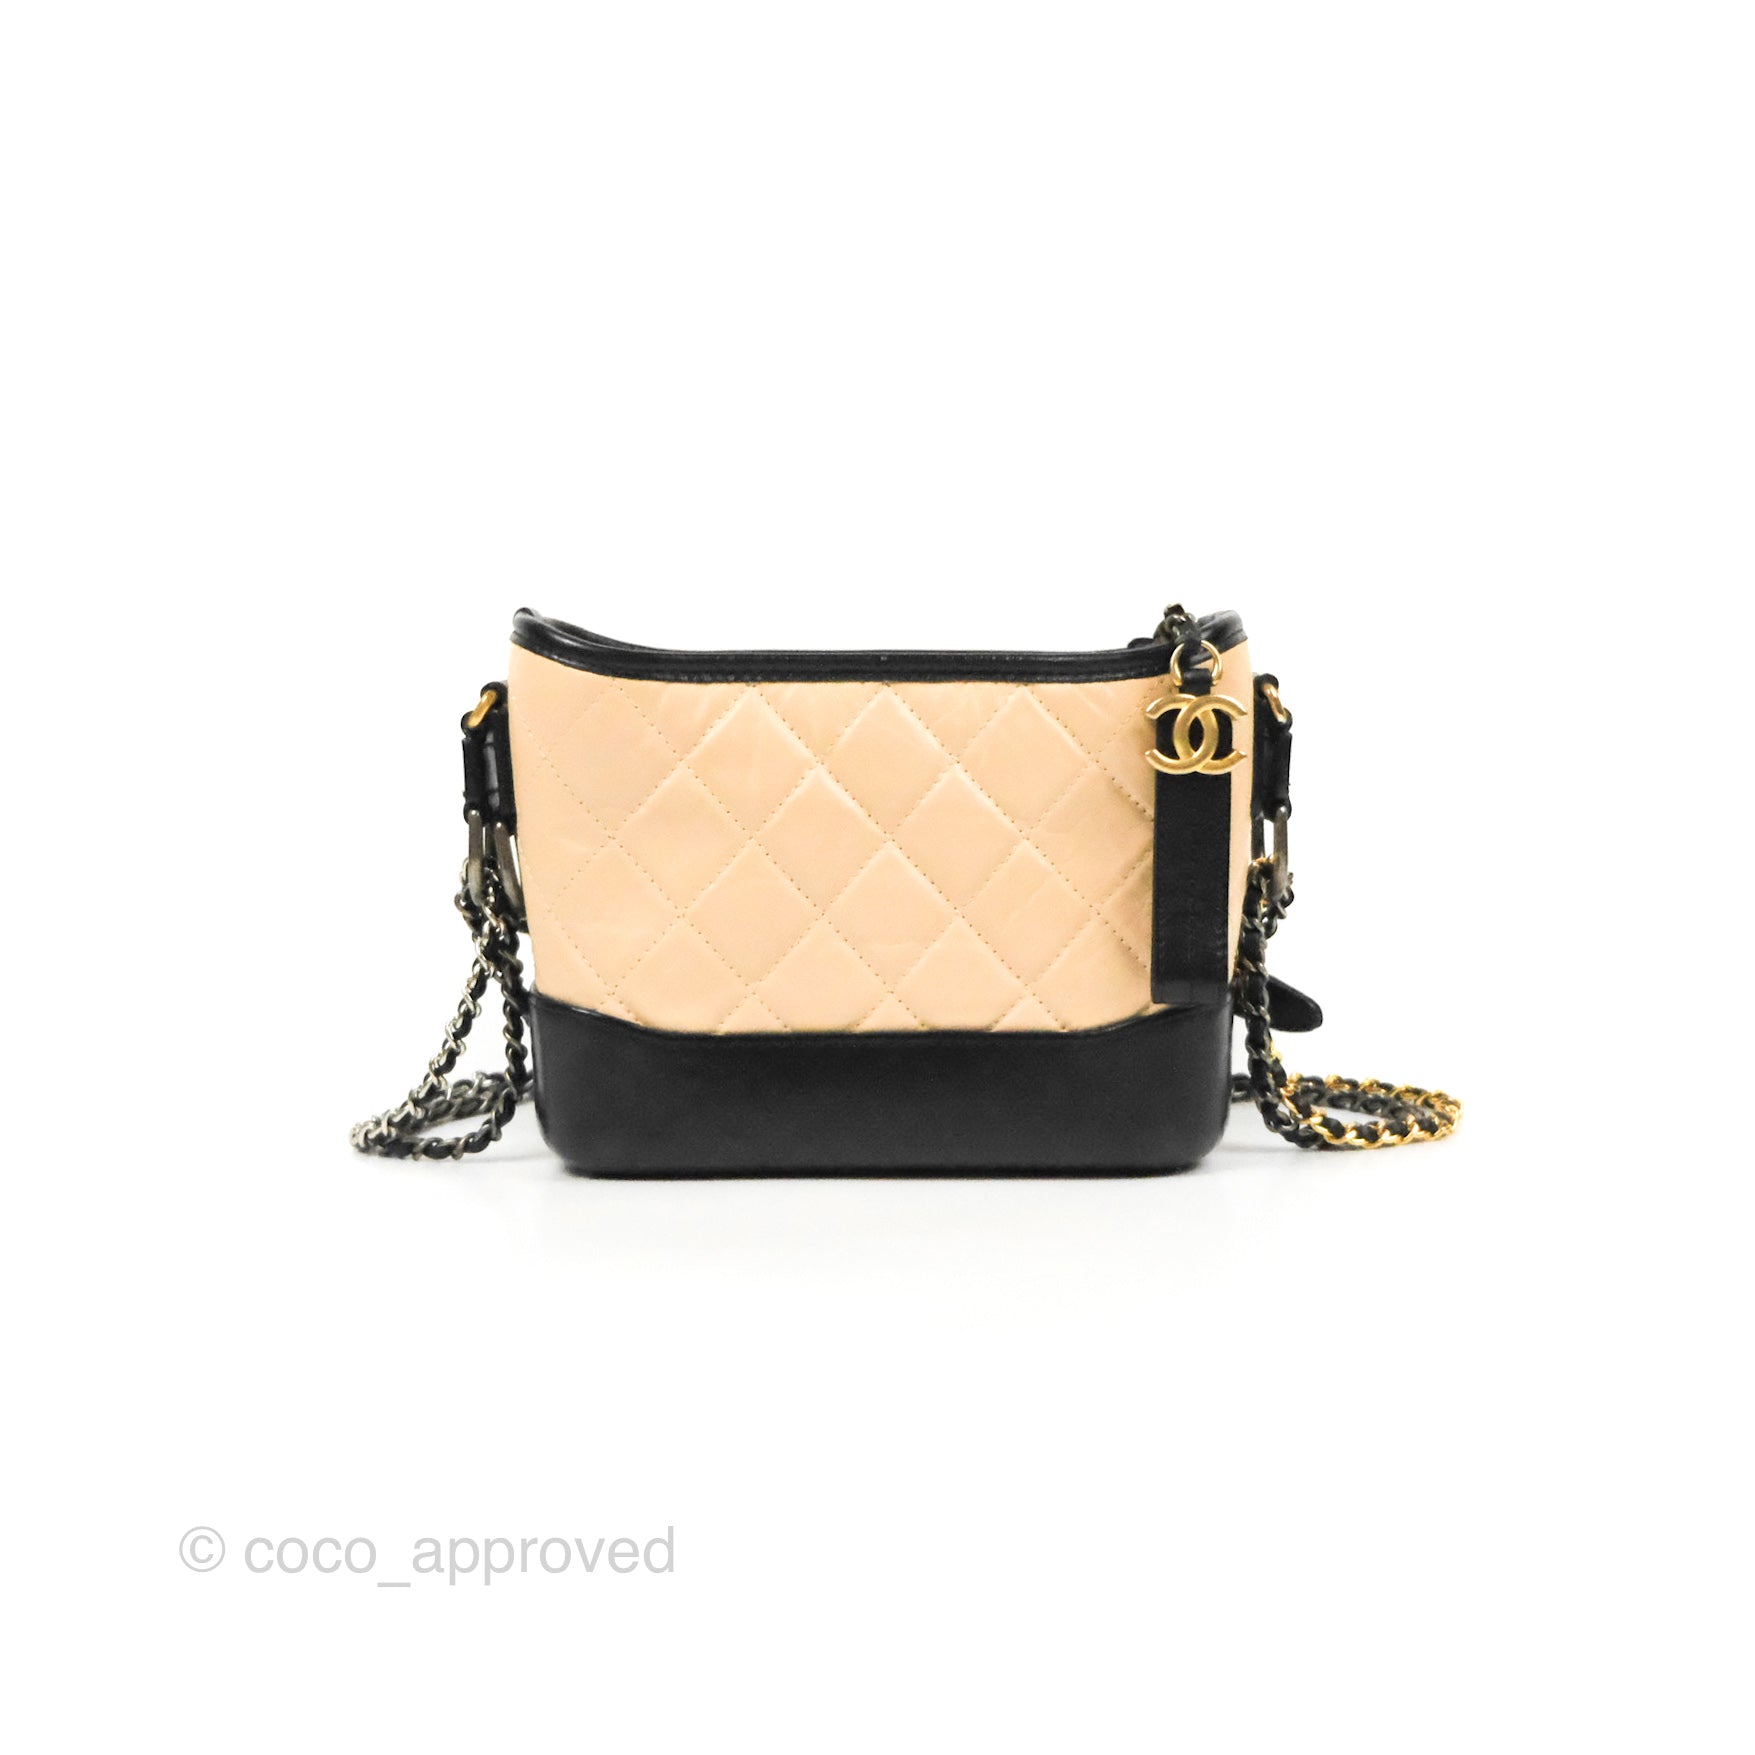 Chanel Gabrielle Small Hobo Crossbody Bag